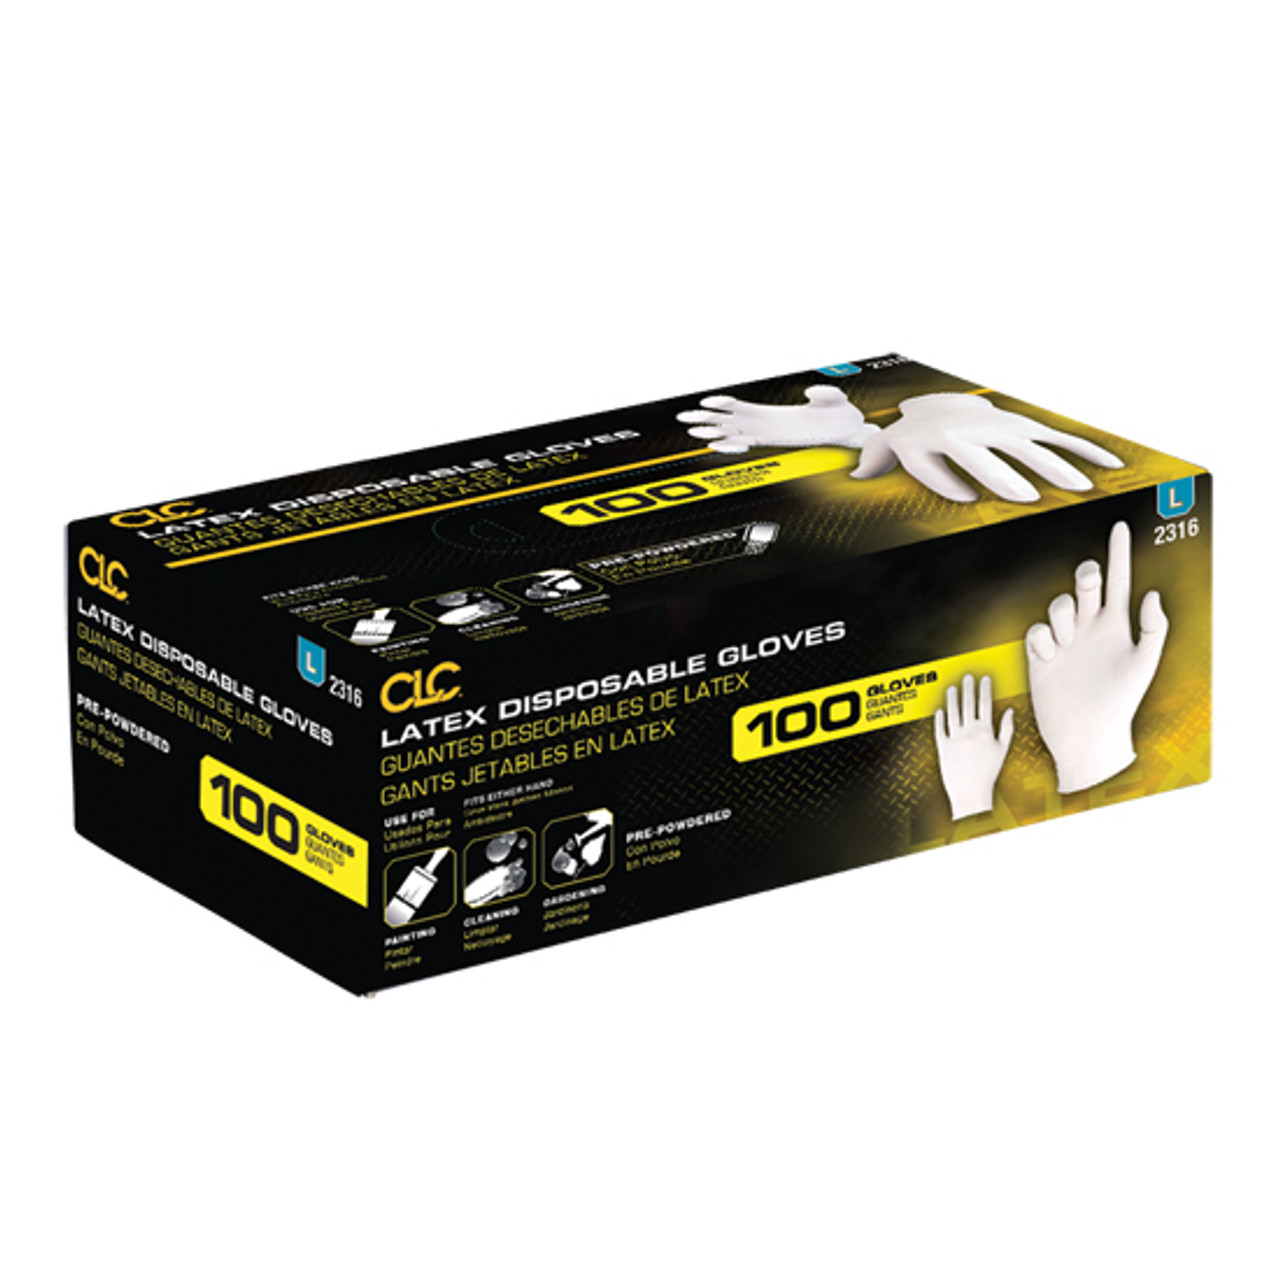 Latex Disposable Gloves, Medium, Pre-Powdered, 100 pk